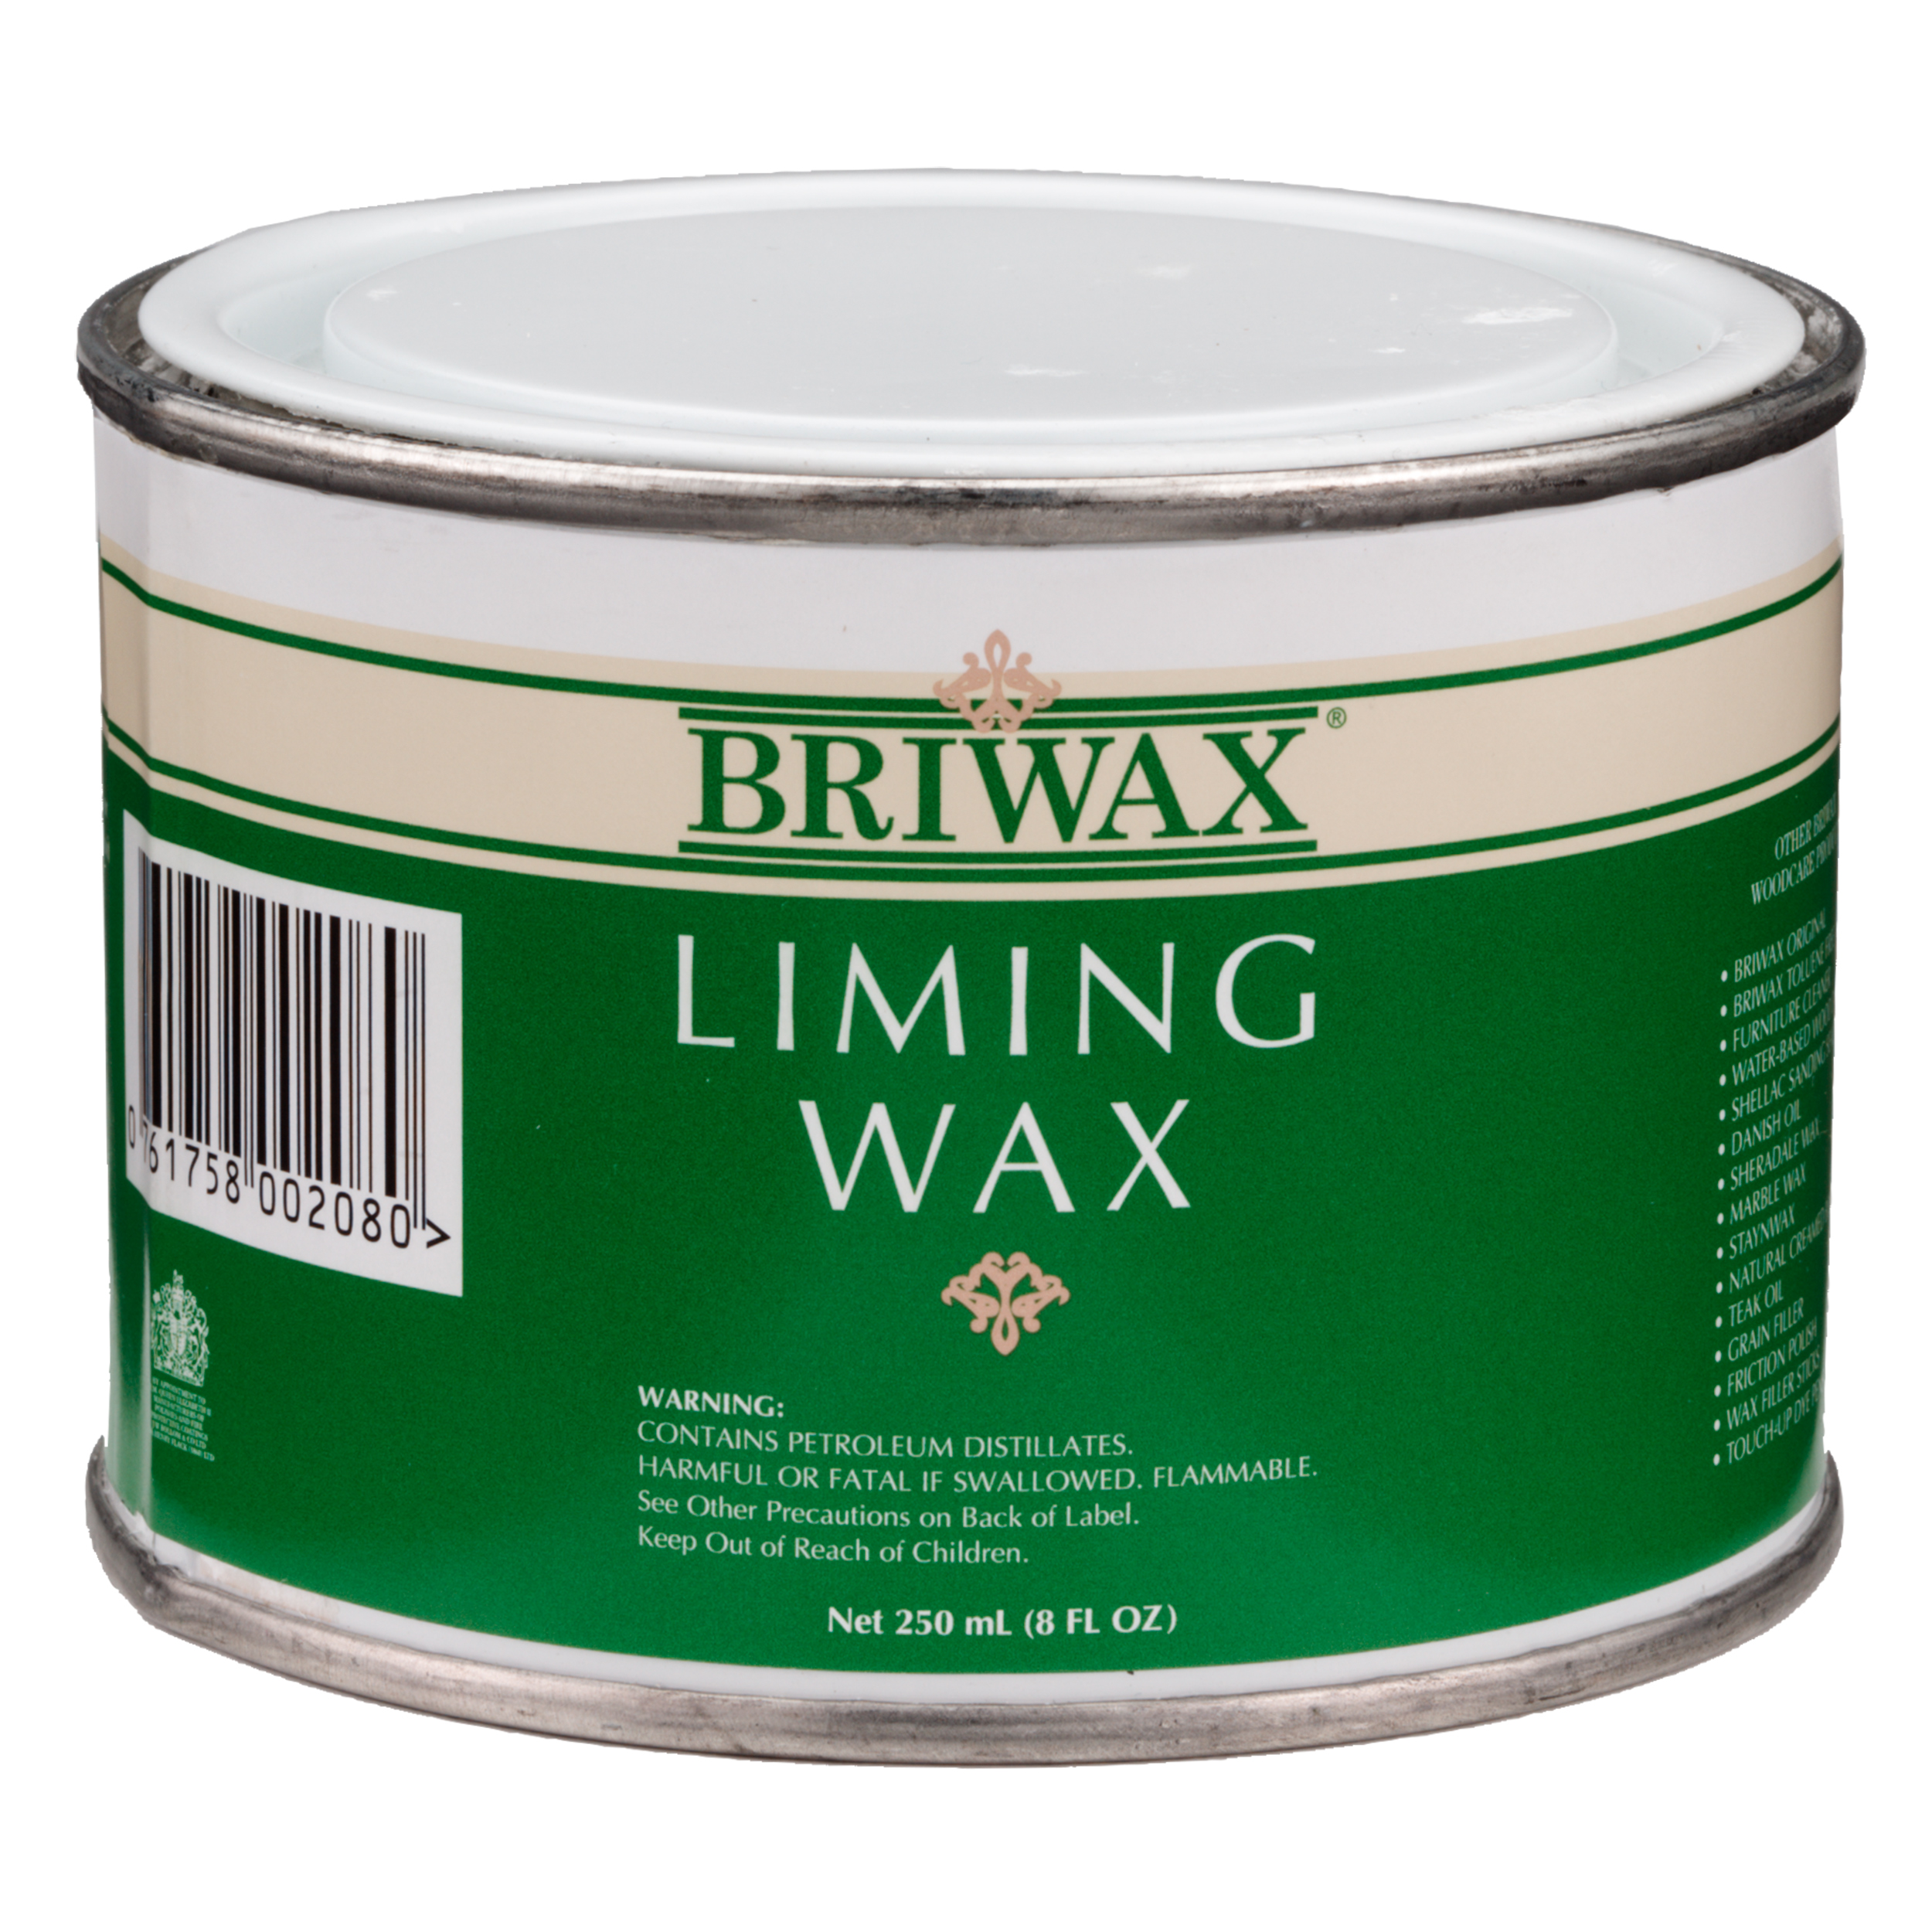 Liming Wax, 8 -oz